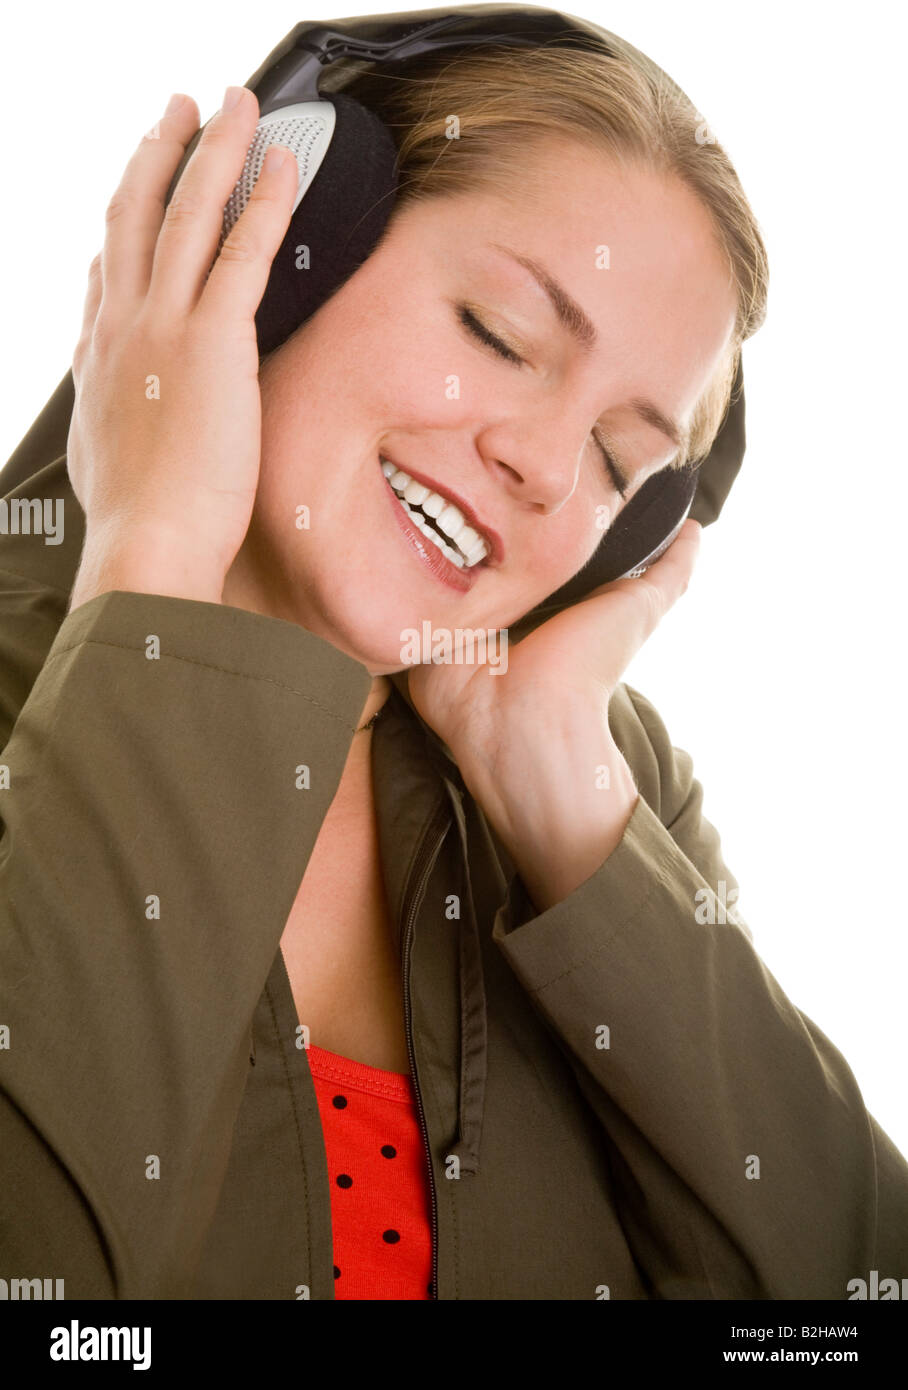 delighted woman headphone music hearing hi fi audio pop music musical dj diskjockey entertainment Stock Photo